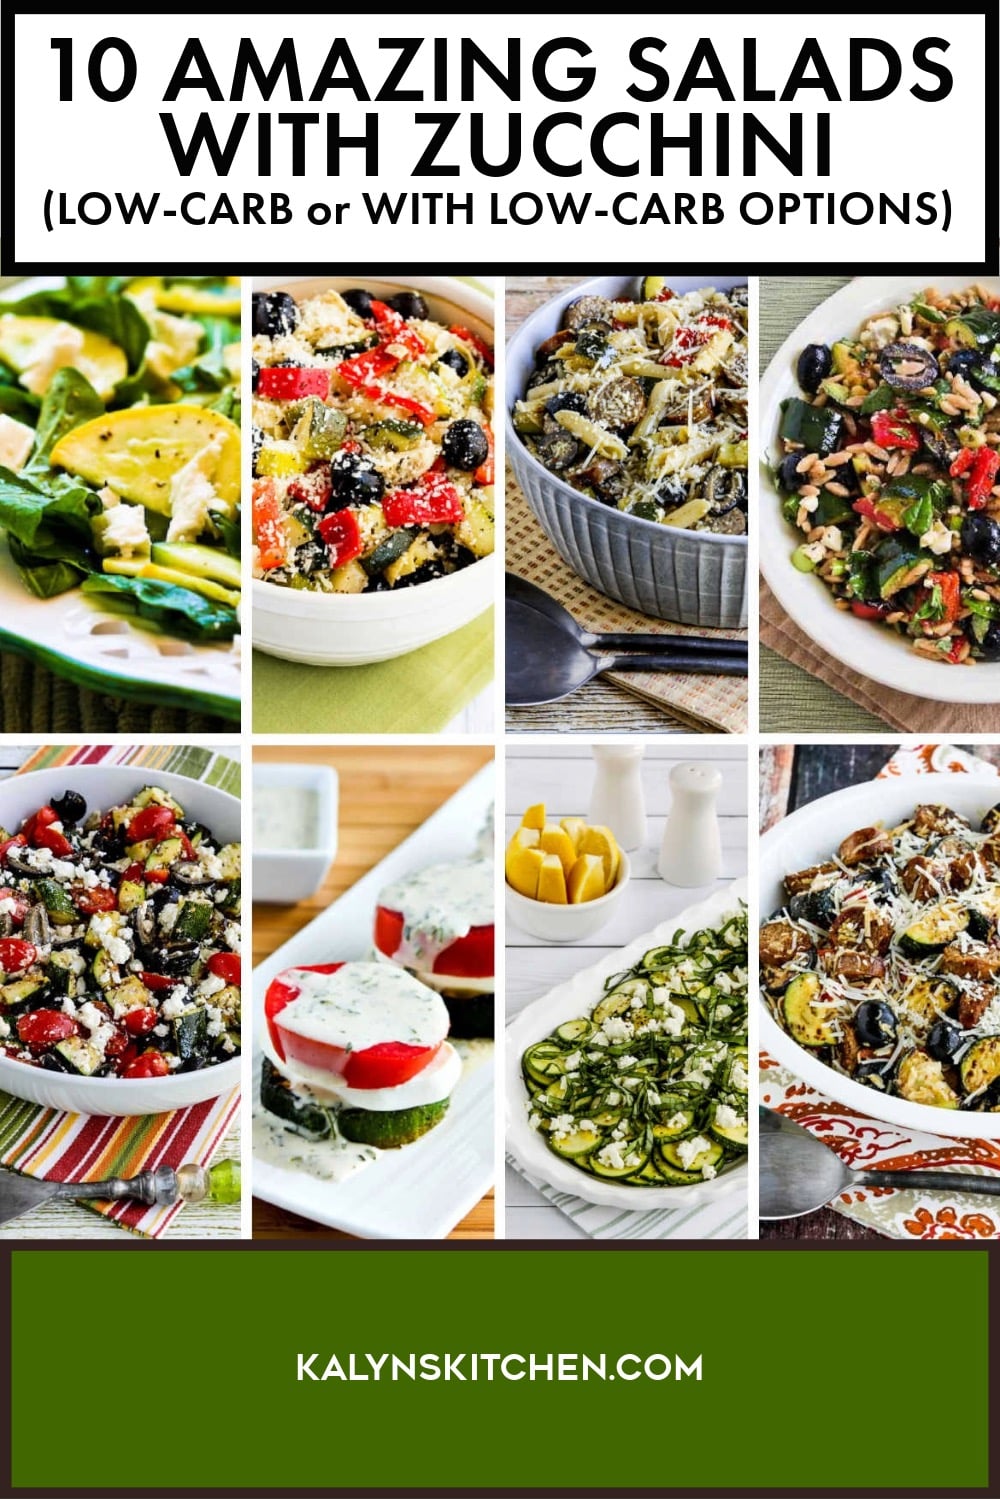 Pinterest image of 10 Amazing Salads with Zucchini